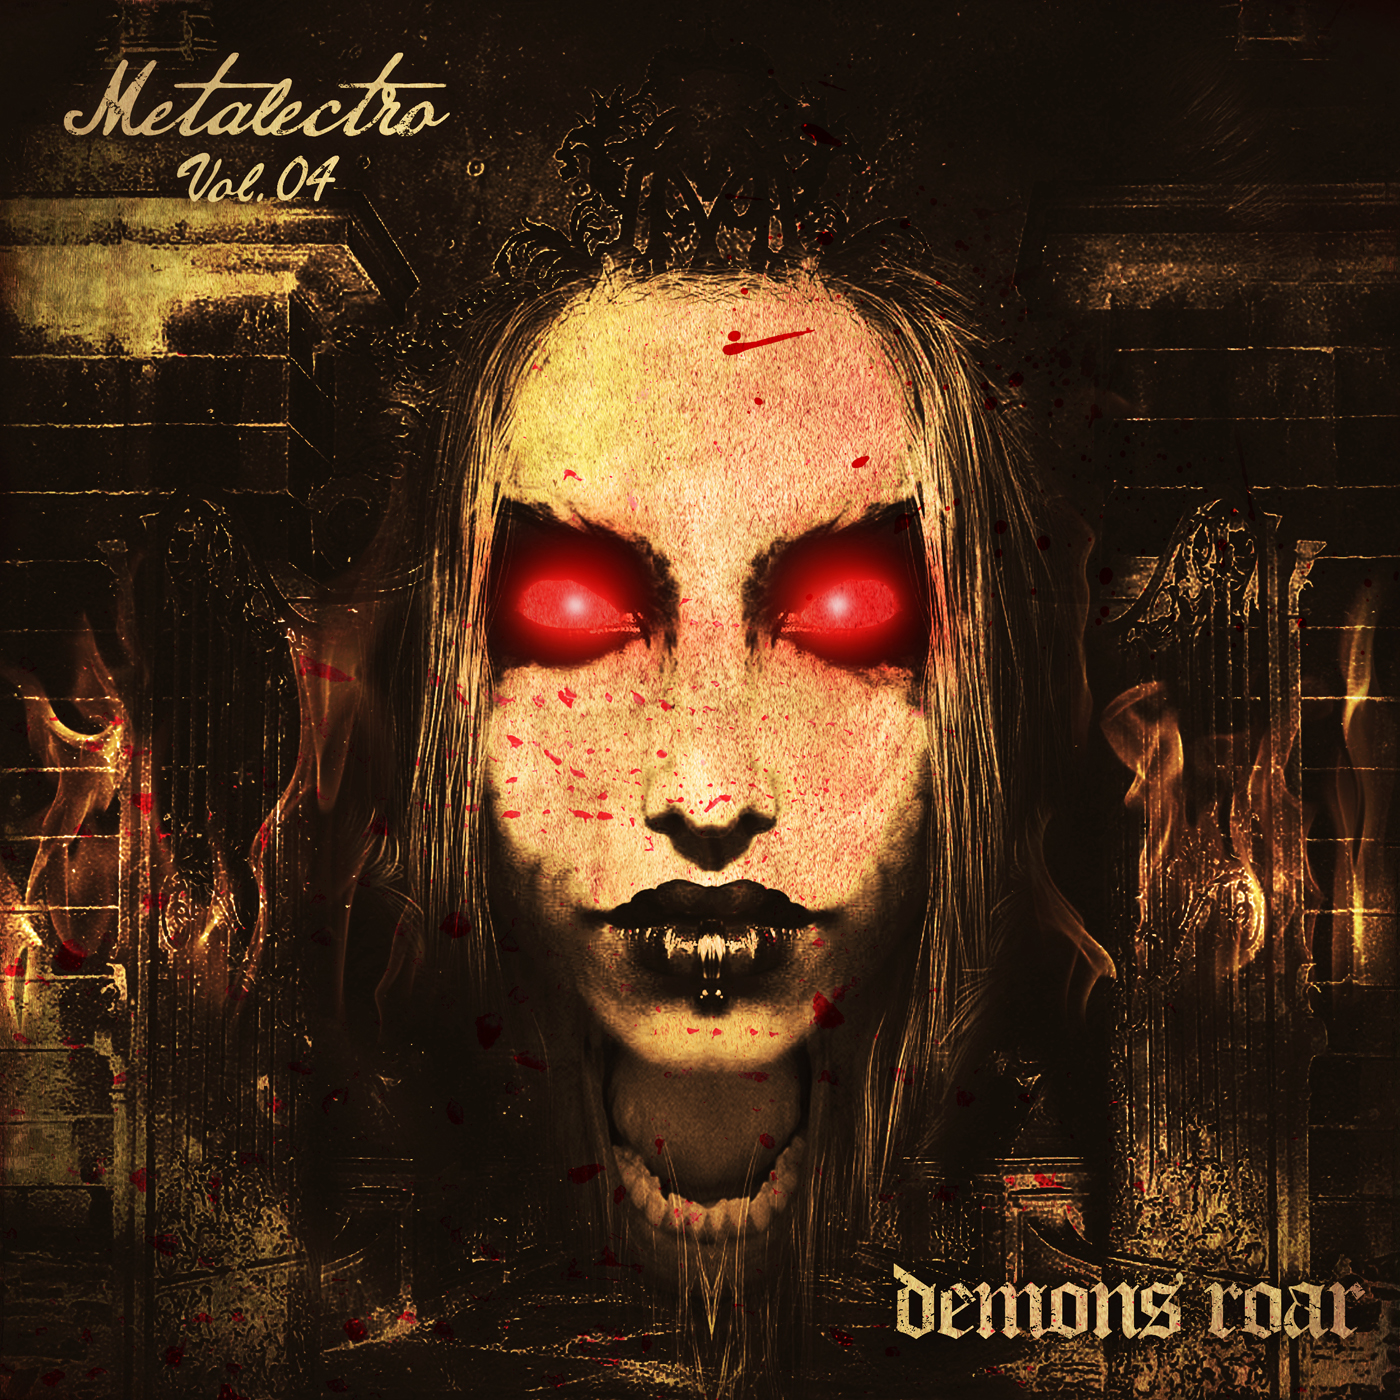 Metalectro Vol.04 "Demons Roar"